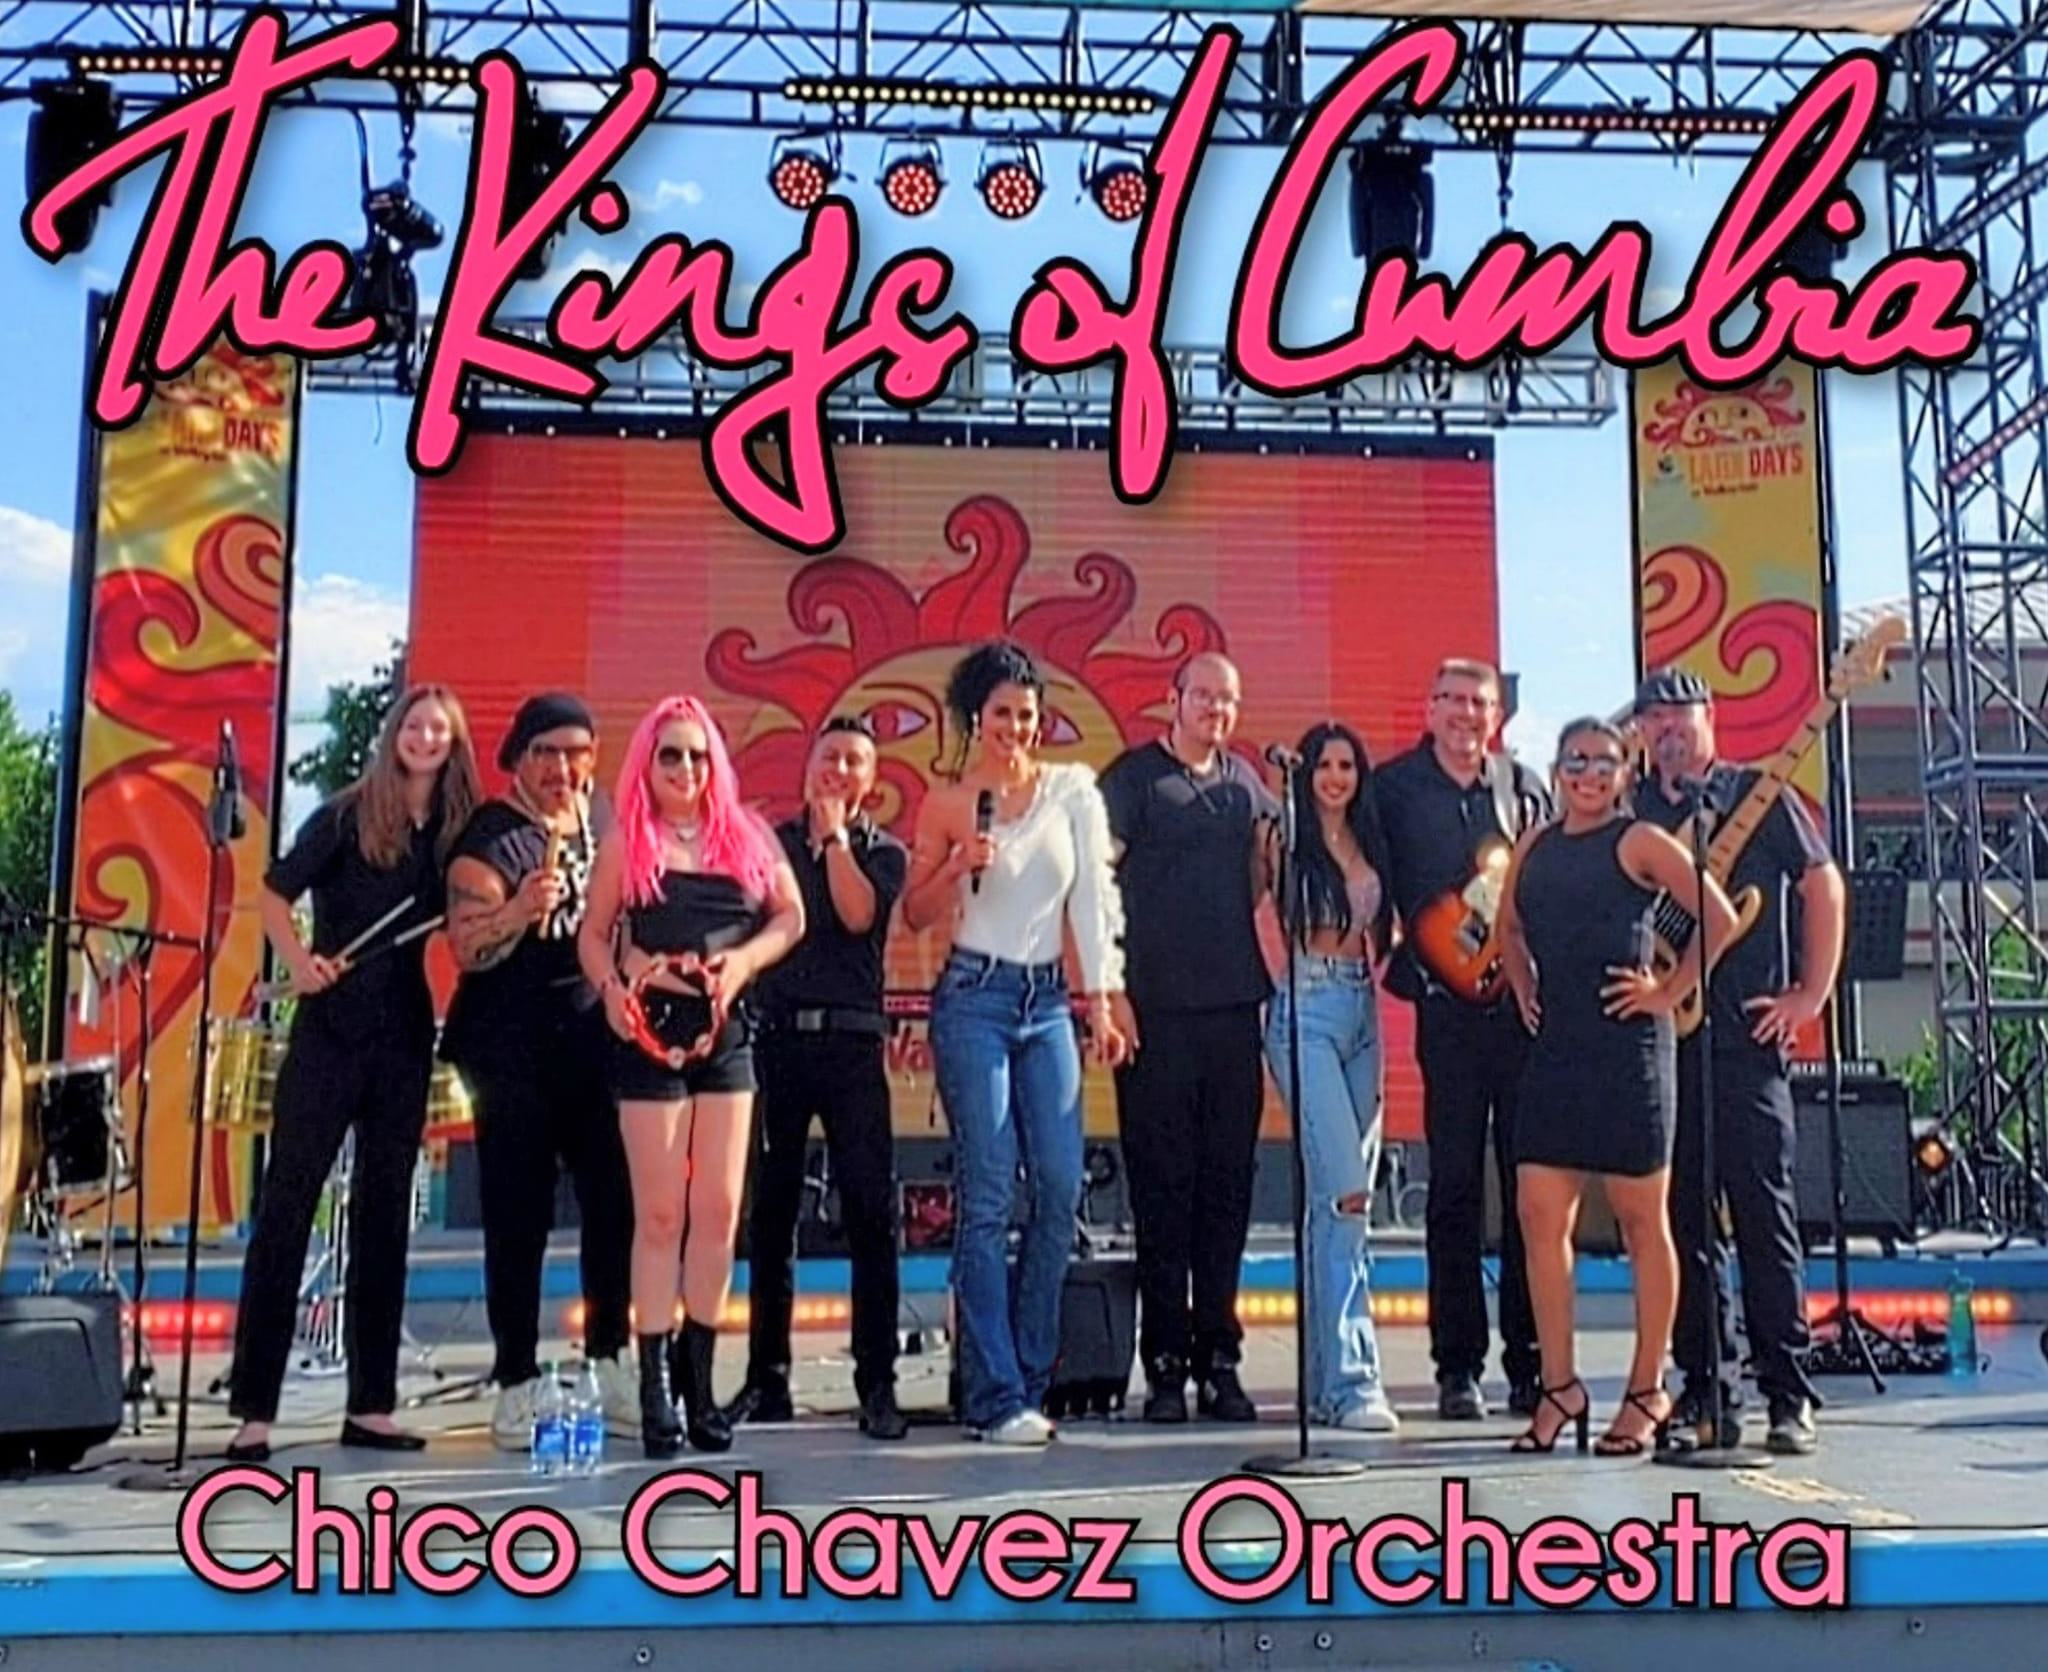 Chico Chavez Orchestra